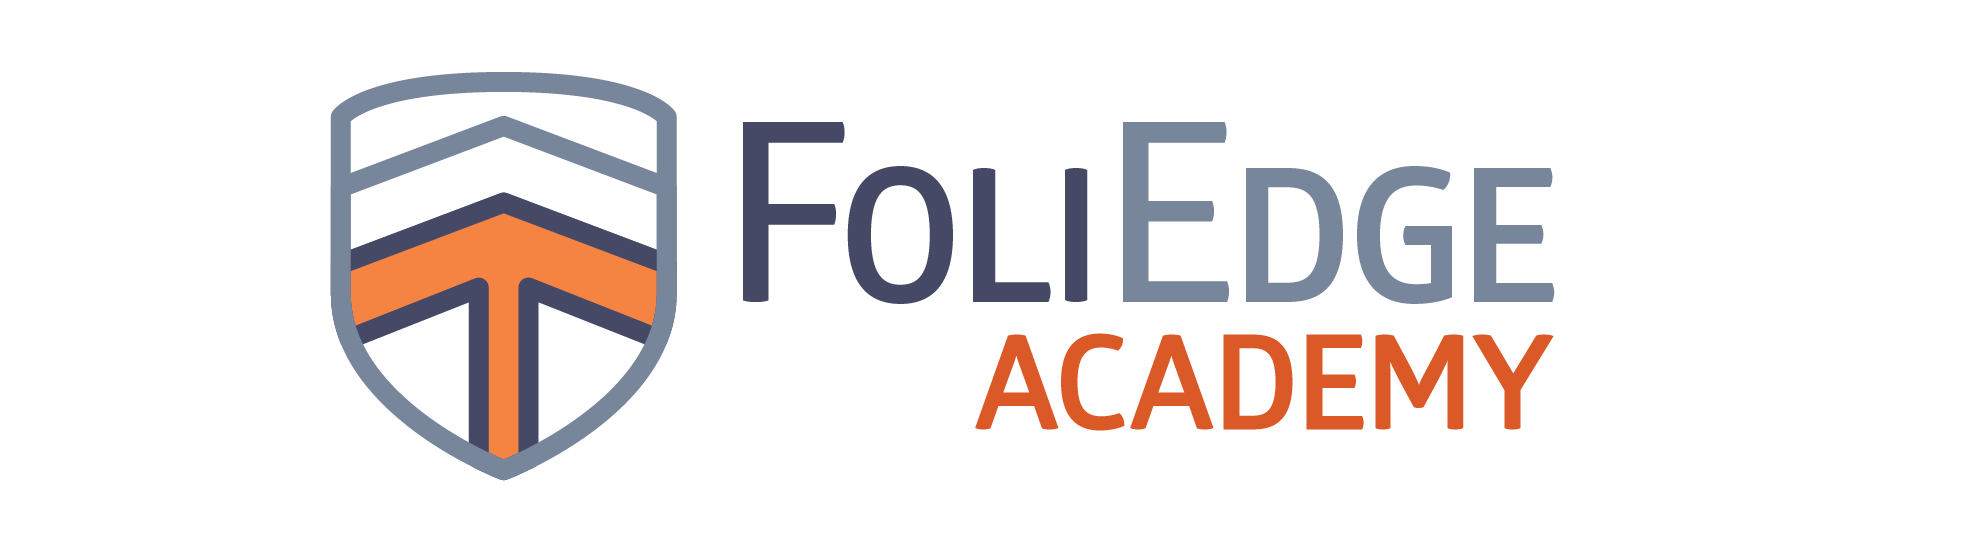 Aleafia Health Launches Cannabis Education Platform FoliEdge Academy